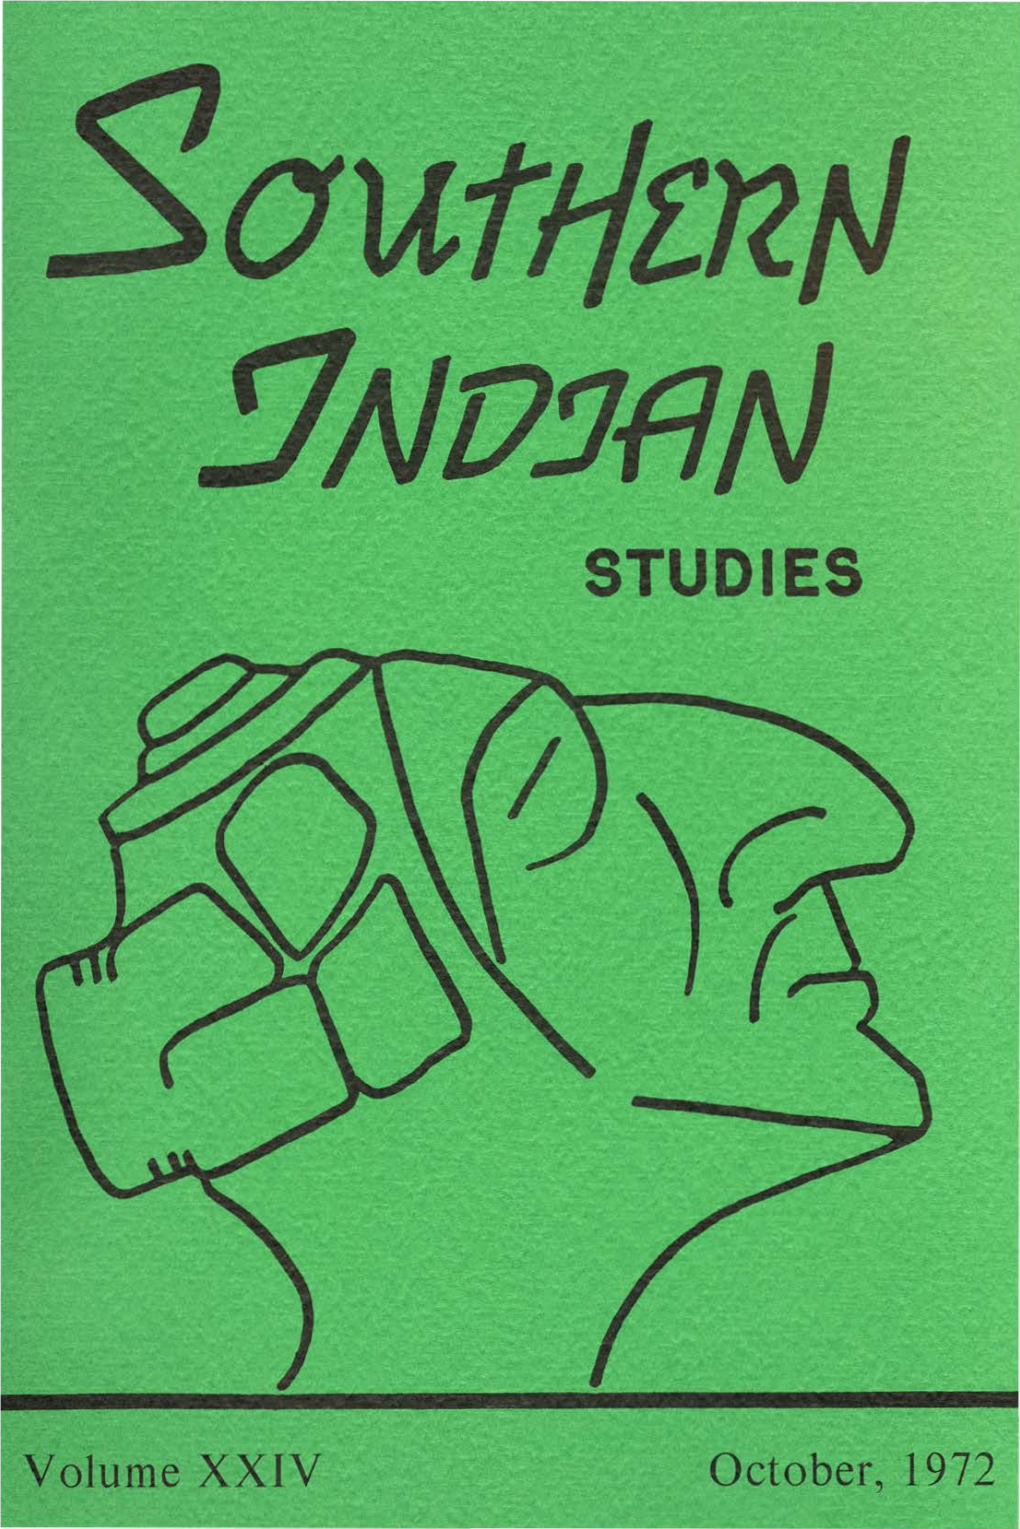 Southern Indian Studies, Vol. 24